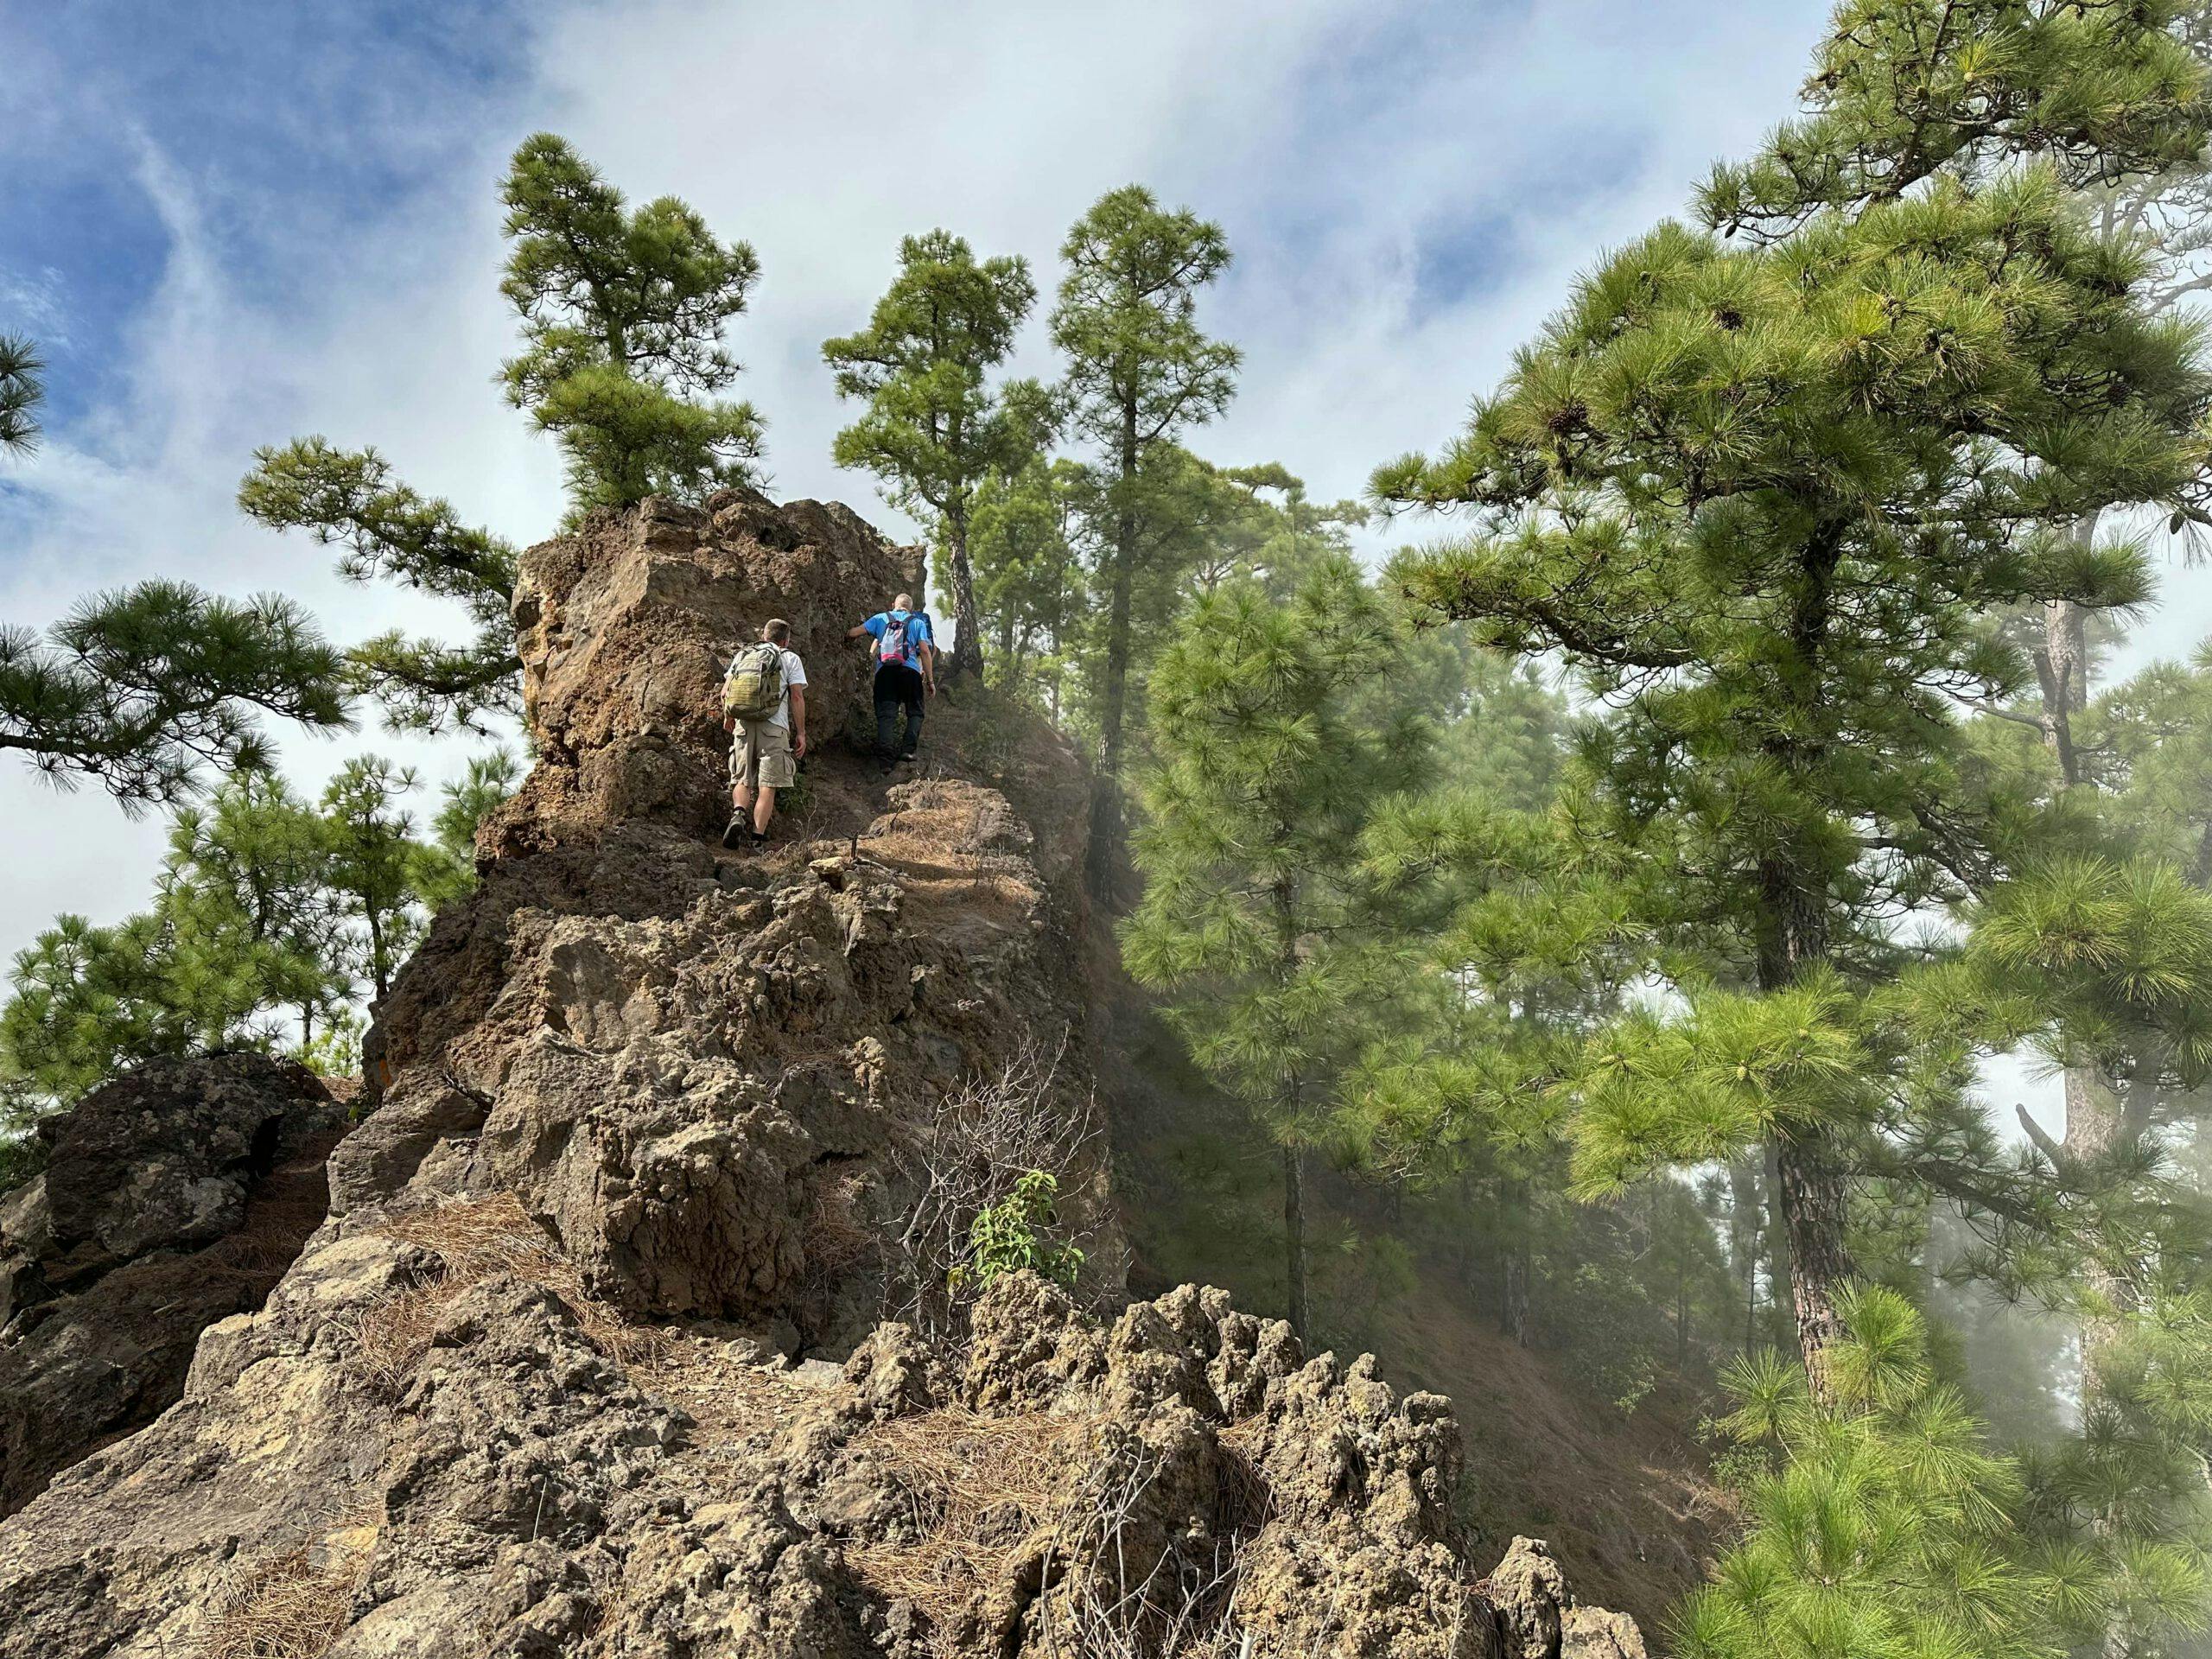 Pico Igonse – Steep ascent and descent to an impressive peak